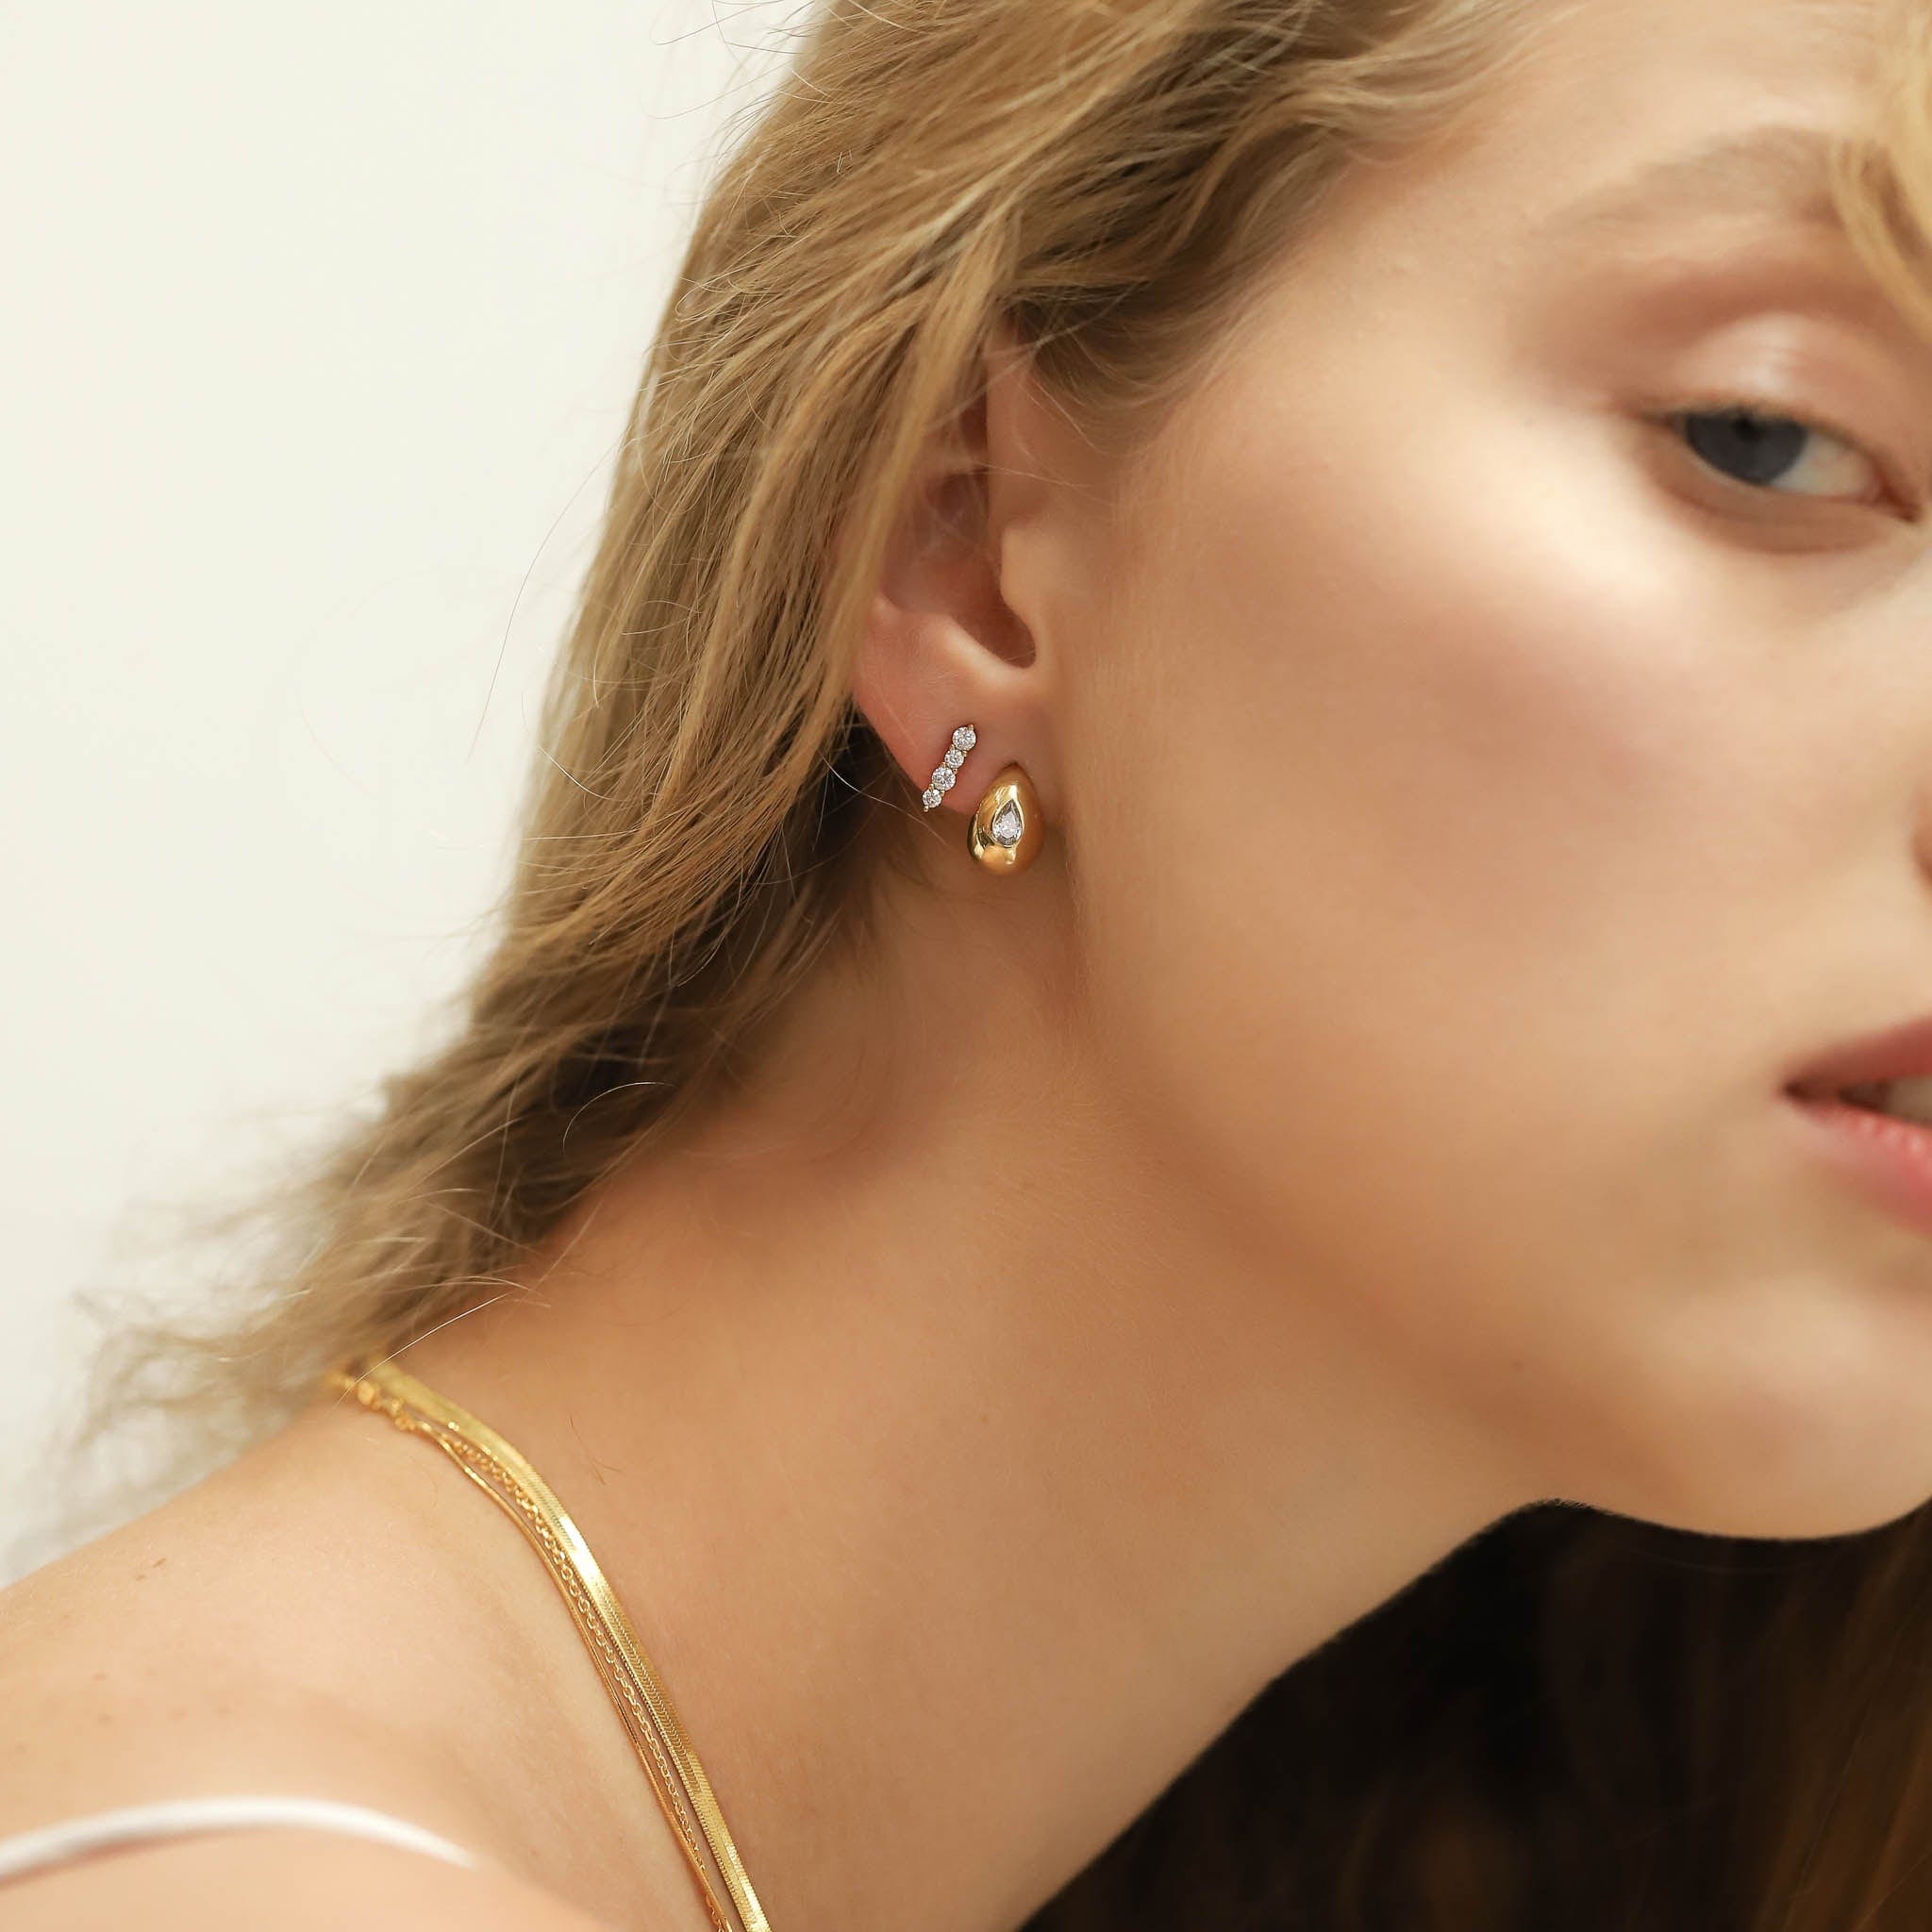 TAI JEWELRY Earrings Tear Shaped Huggie with Embedded CZ Stone